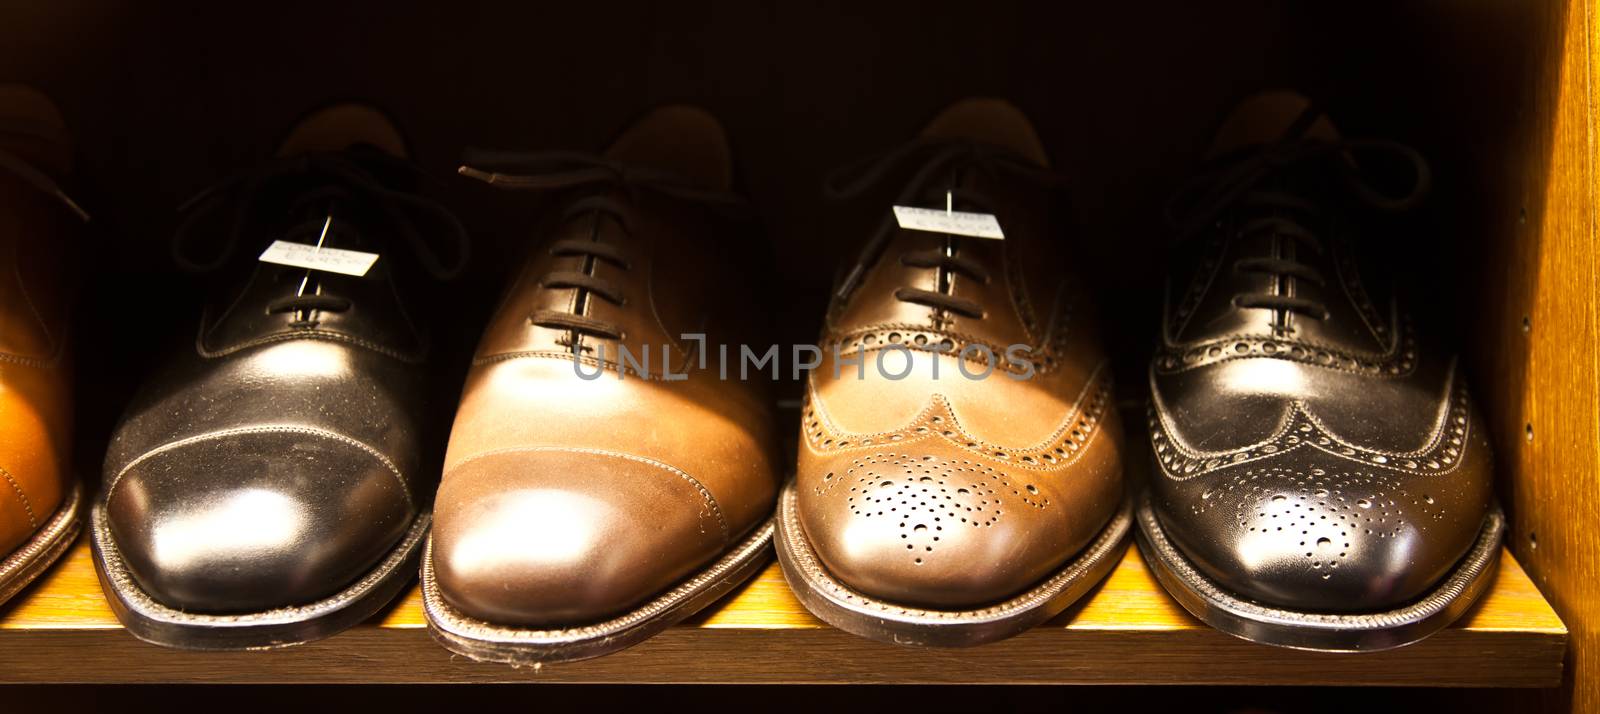 Luxury Italian shoes by Perseomedusa